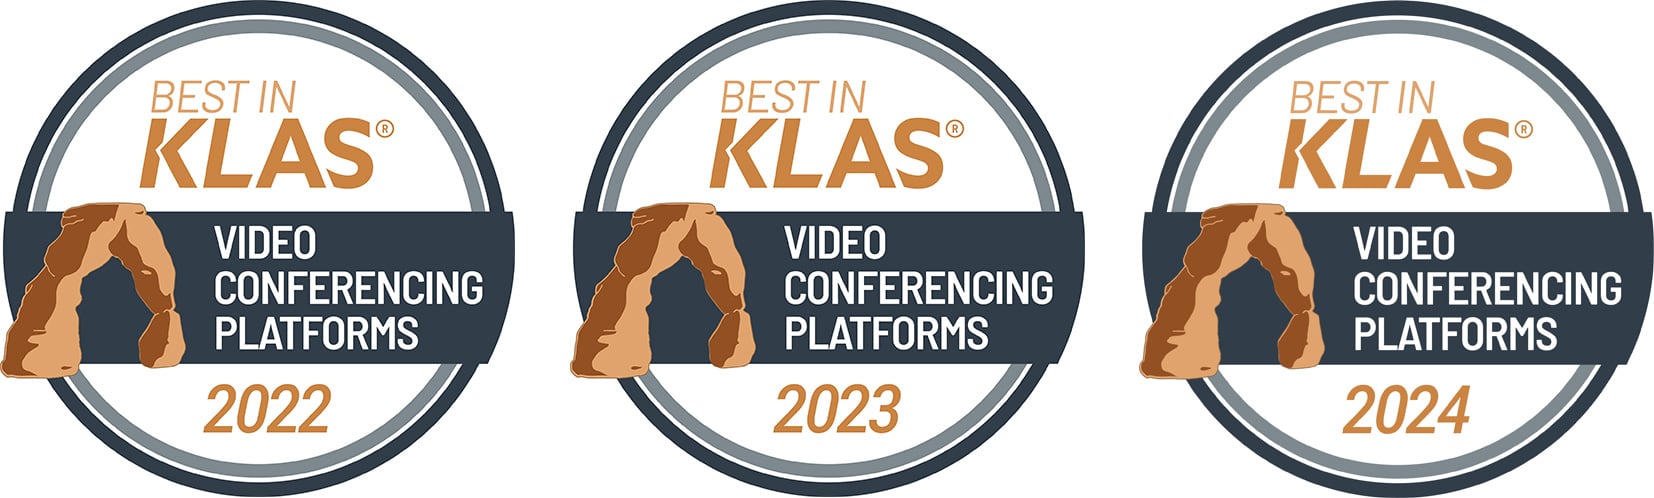 best-in-klas-video-conferencing-platforms